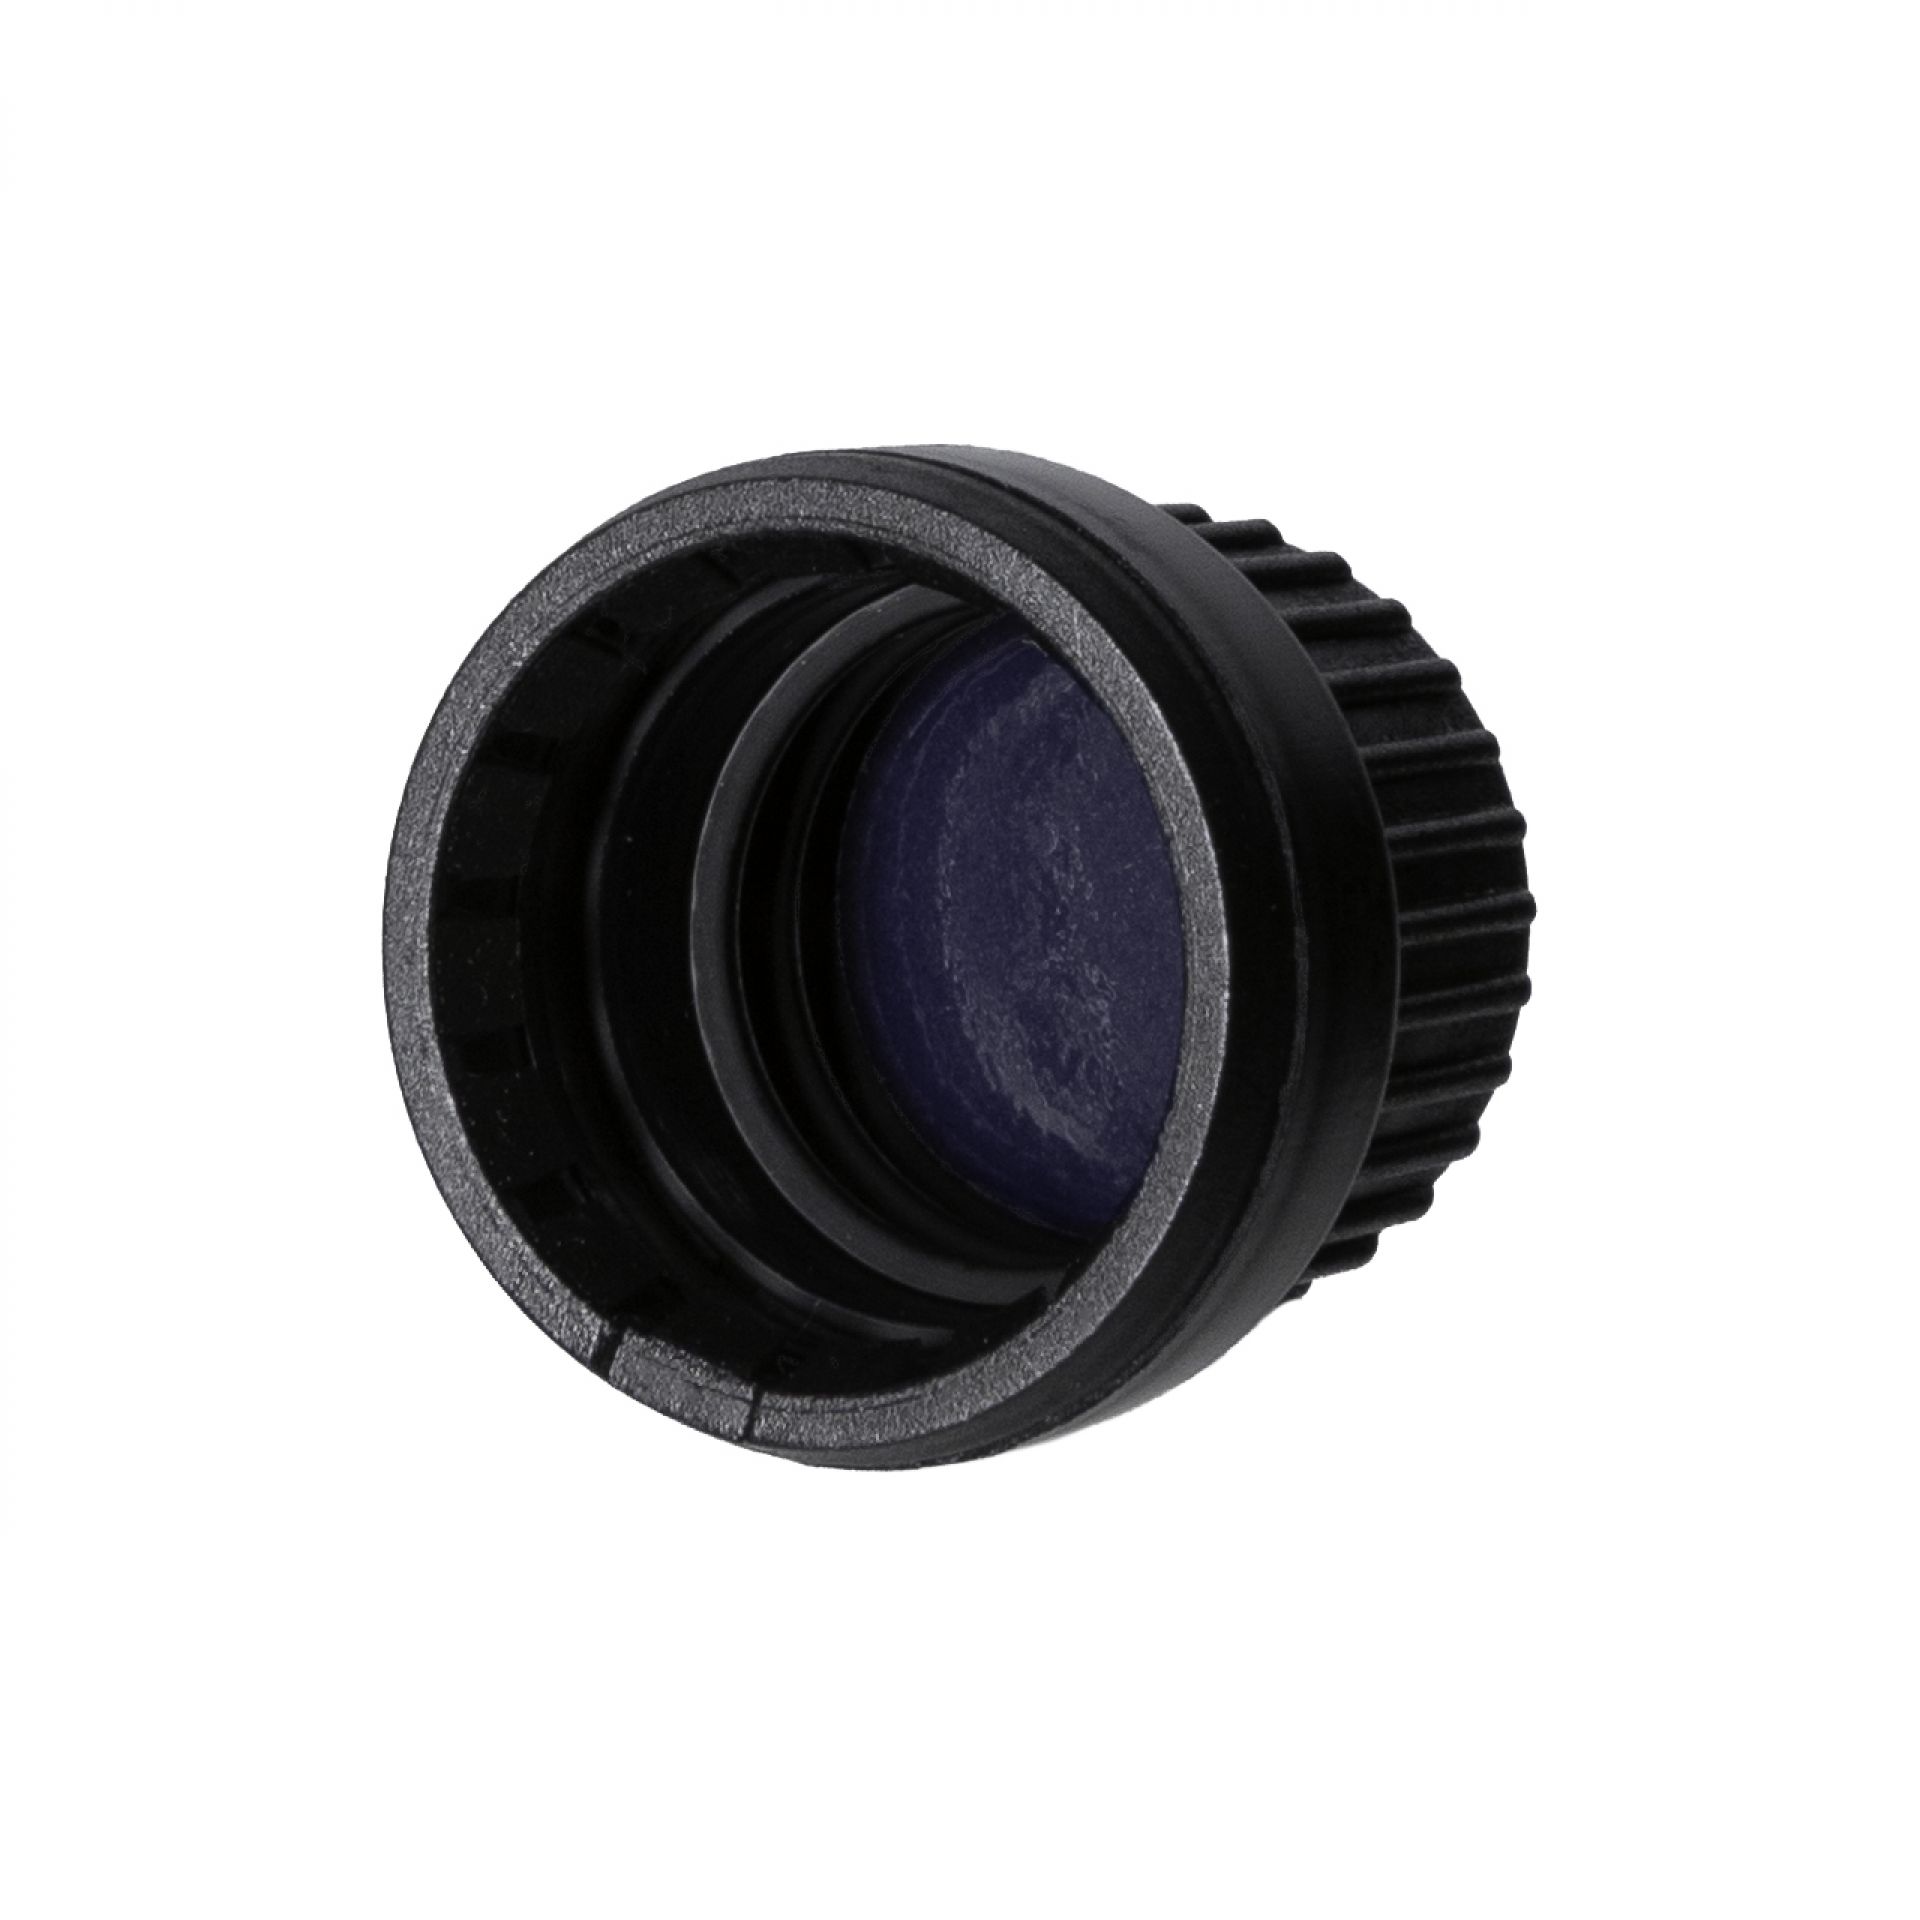 Screw cap tamper-evident DIN18, III, PP, black, violet Phan inlay (Orion)